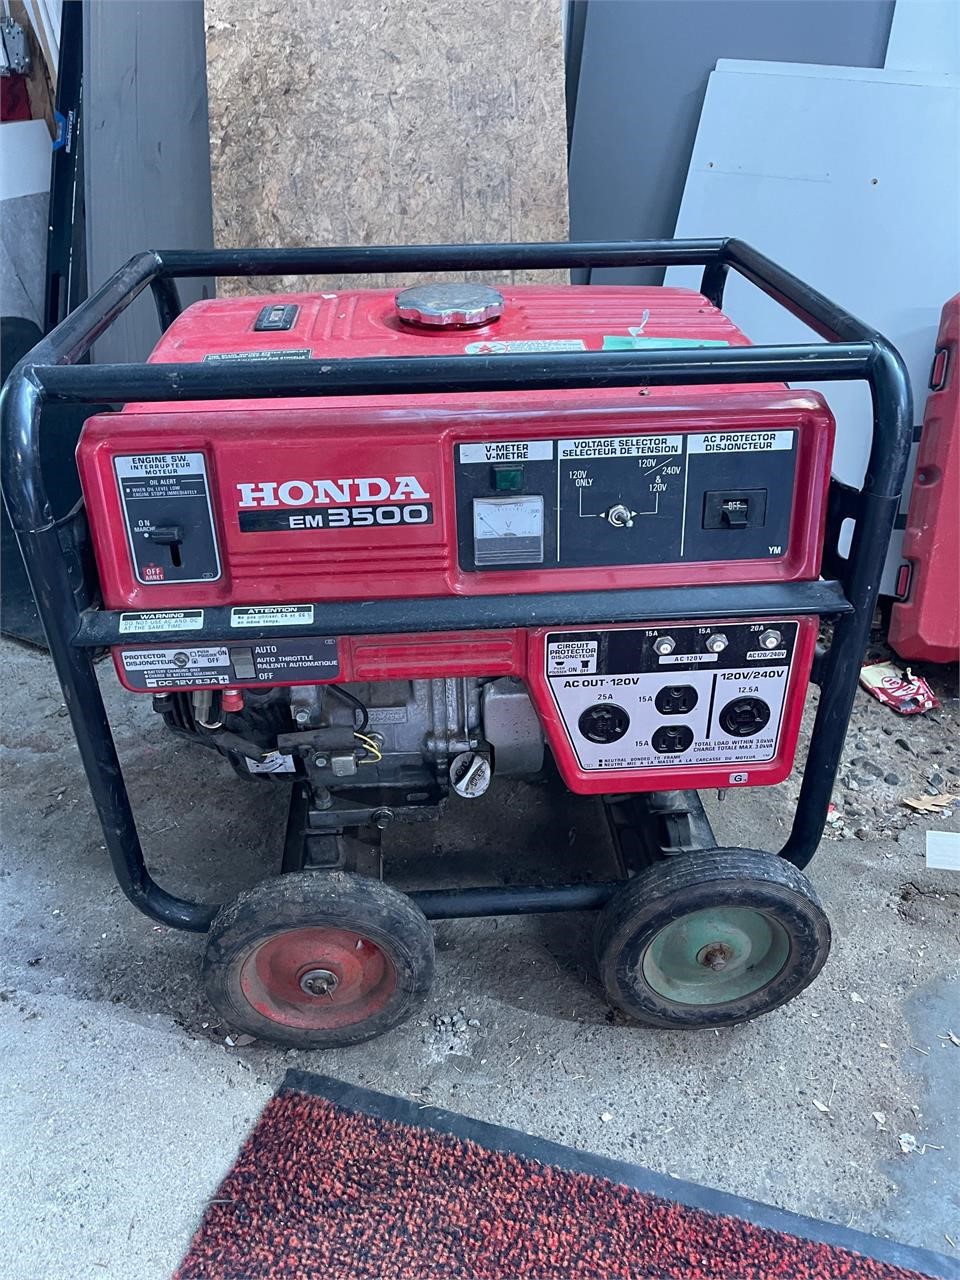 Honda EM3500 generator.